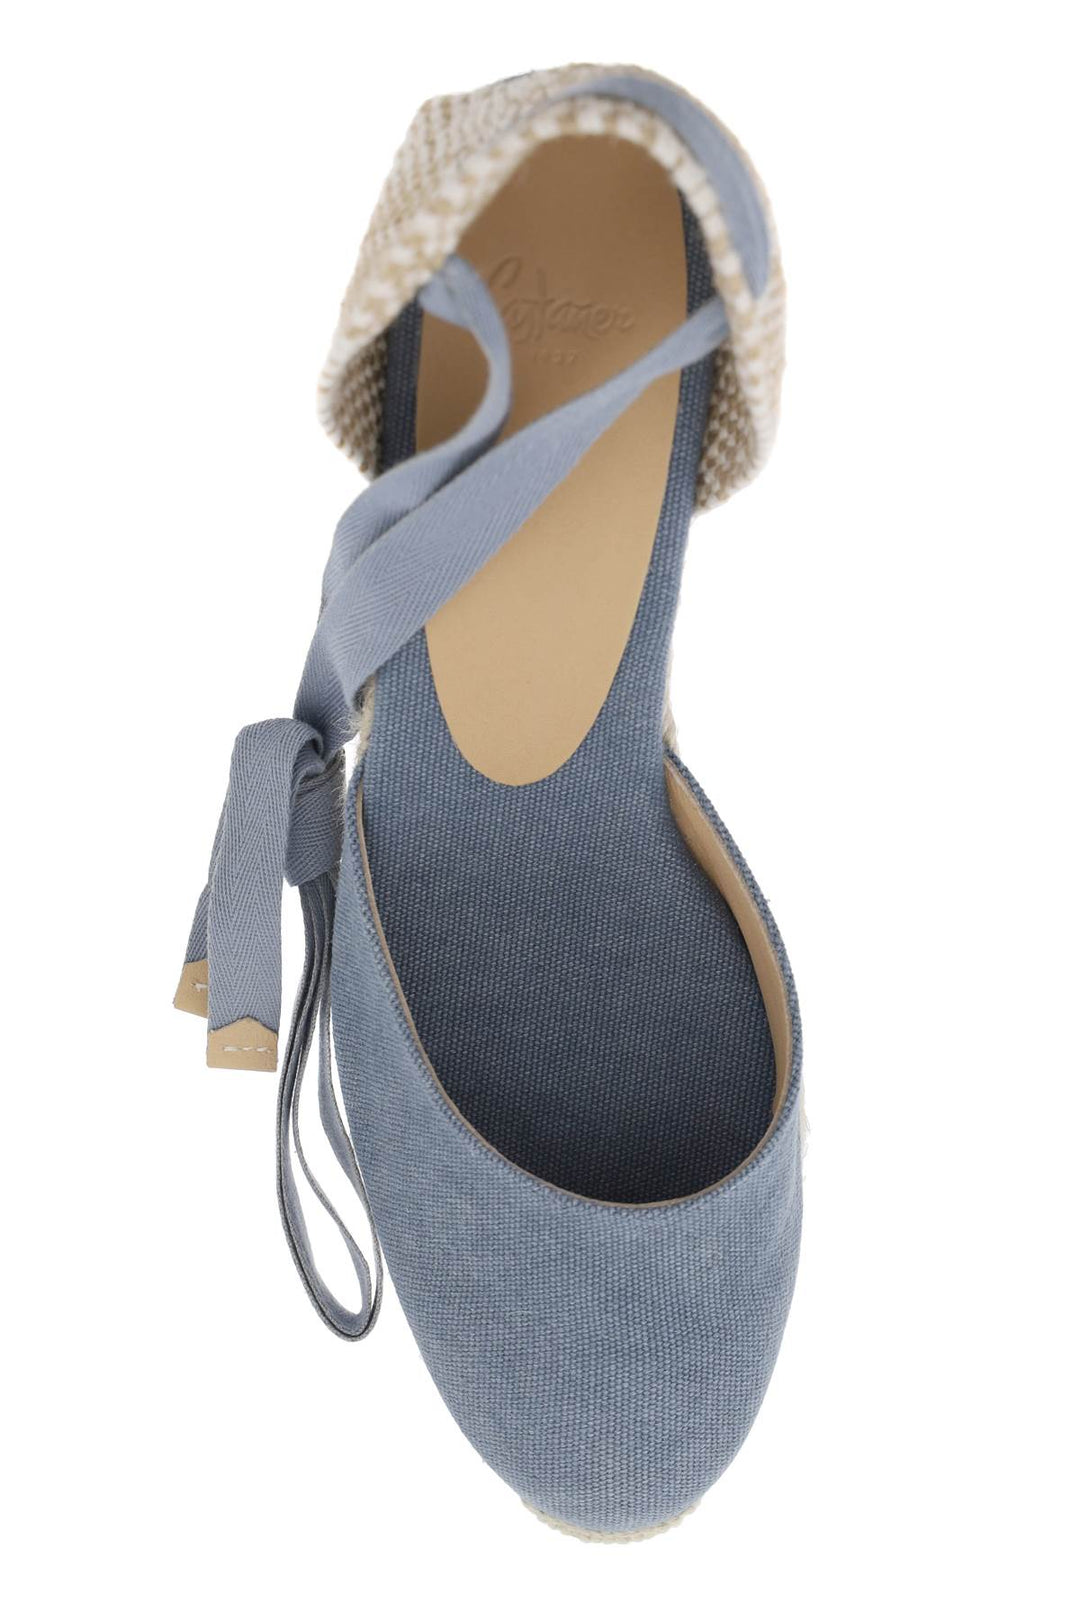 Castaner Carina Wedge Sandals   Blu